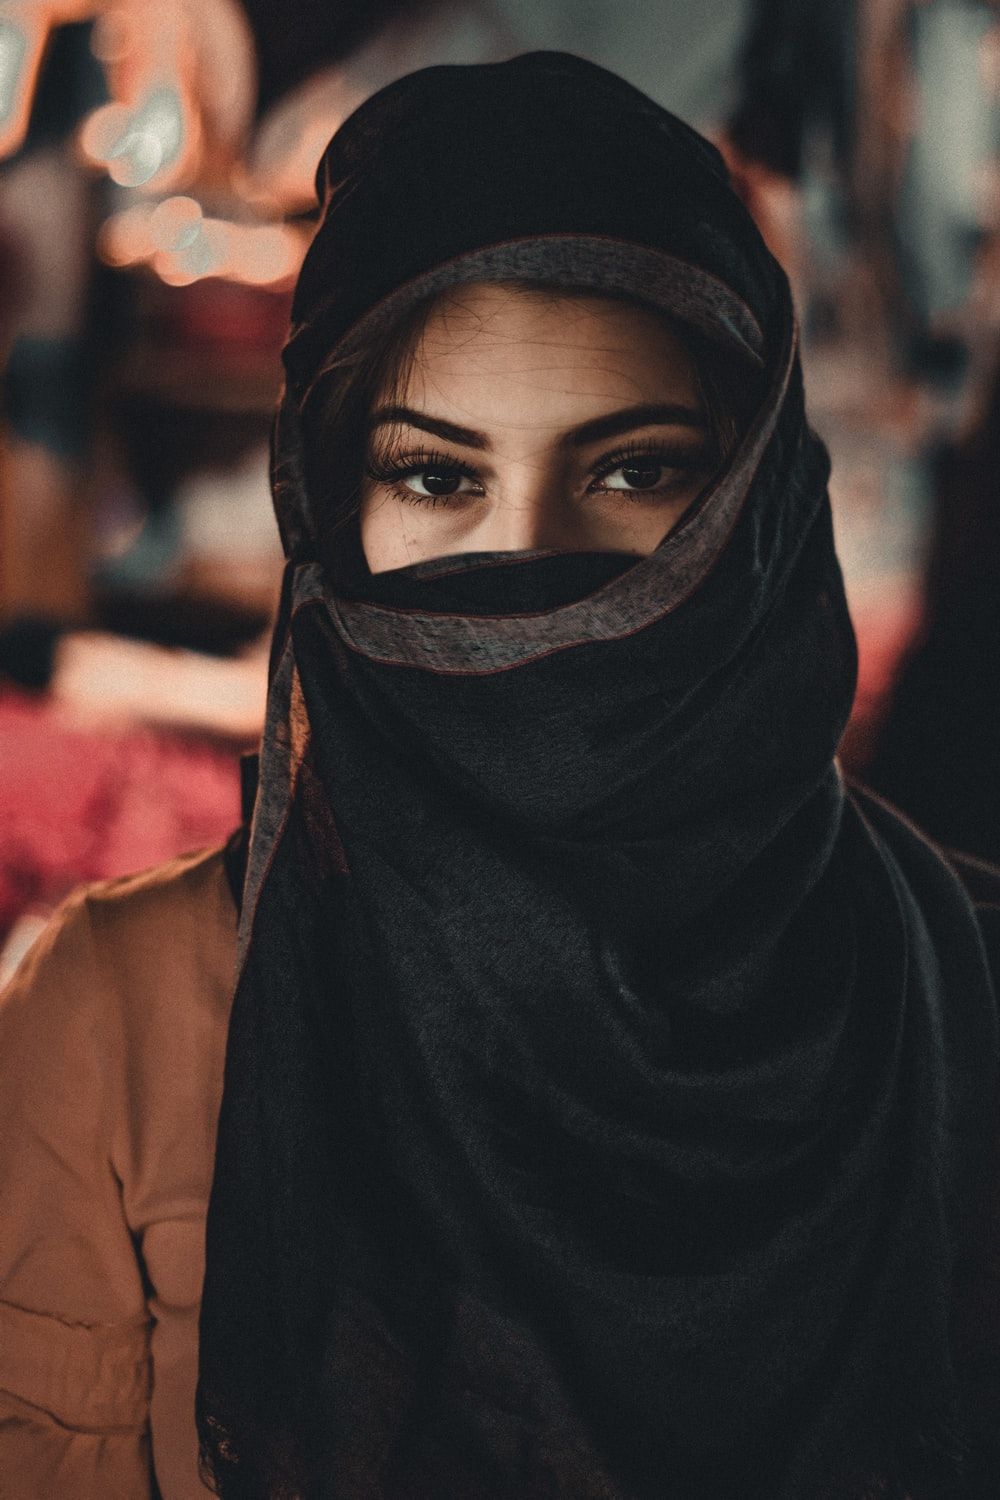 Muslim Women Picture. Download Free Image